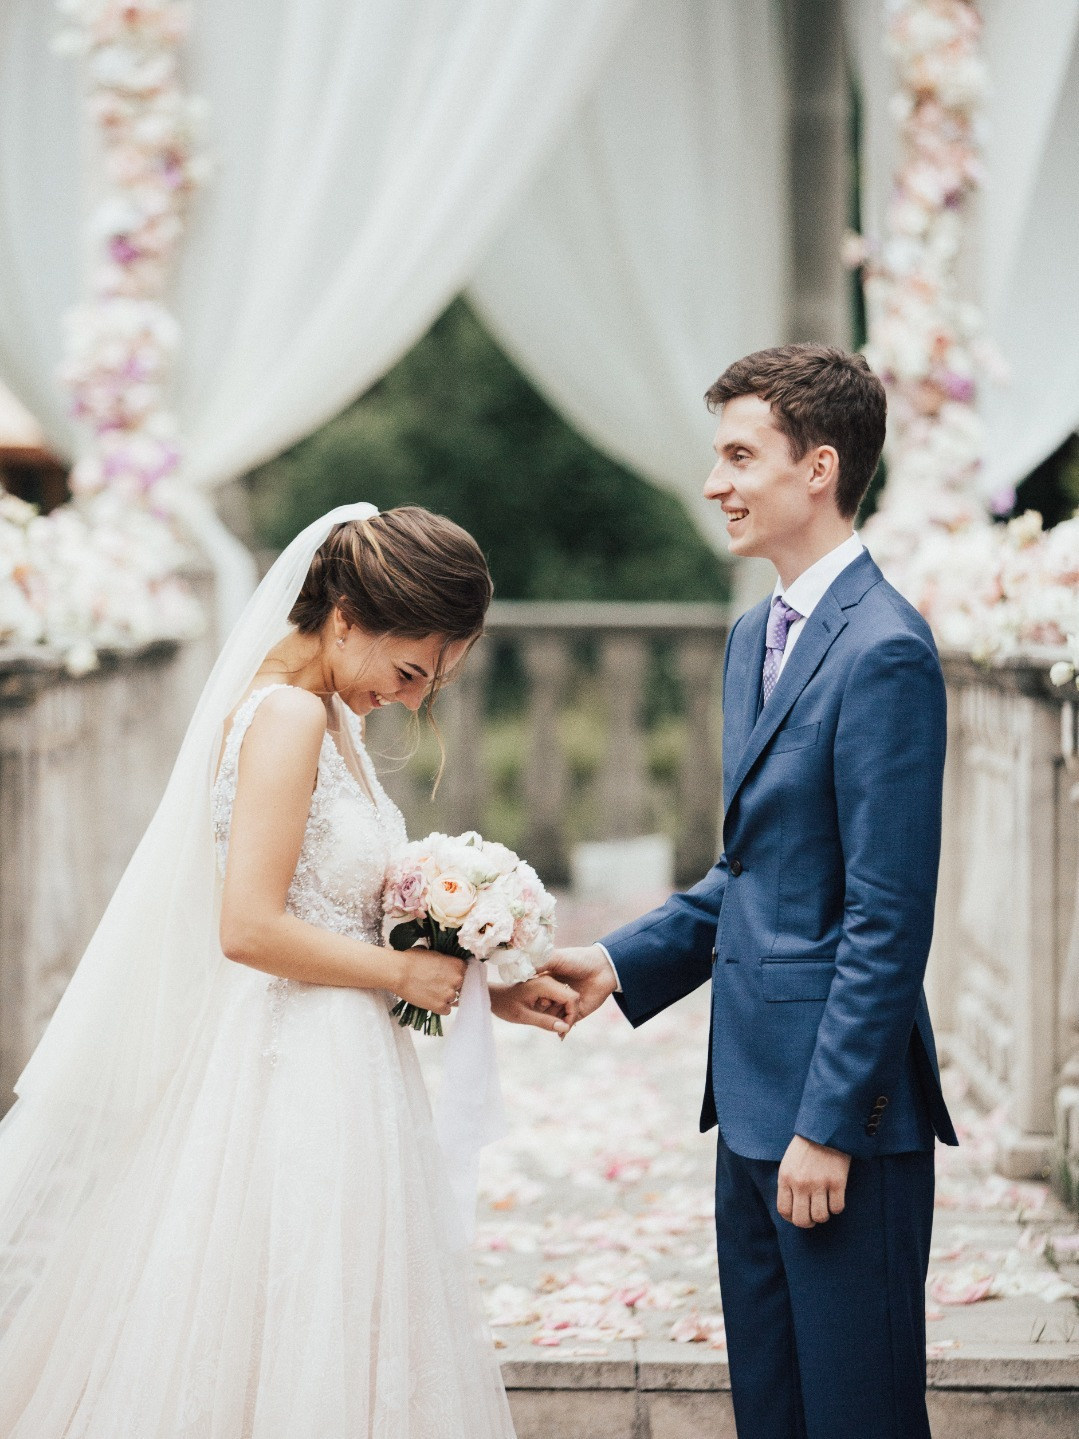 Жизнь как сказка: свадьба по мотивам «Золушки»